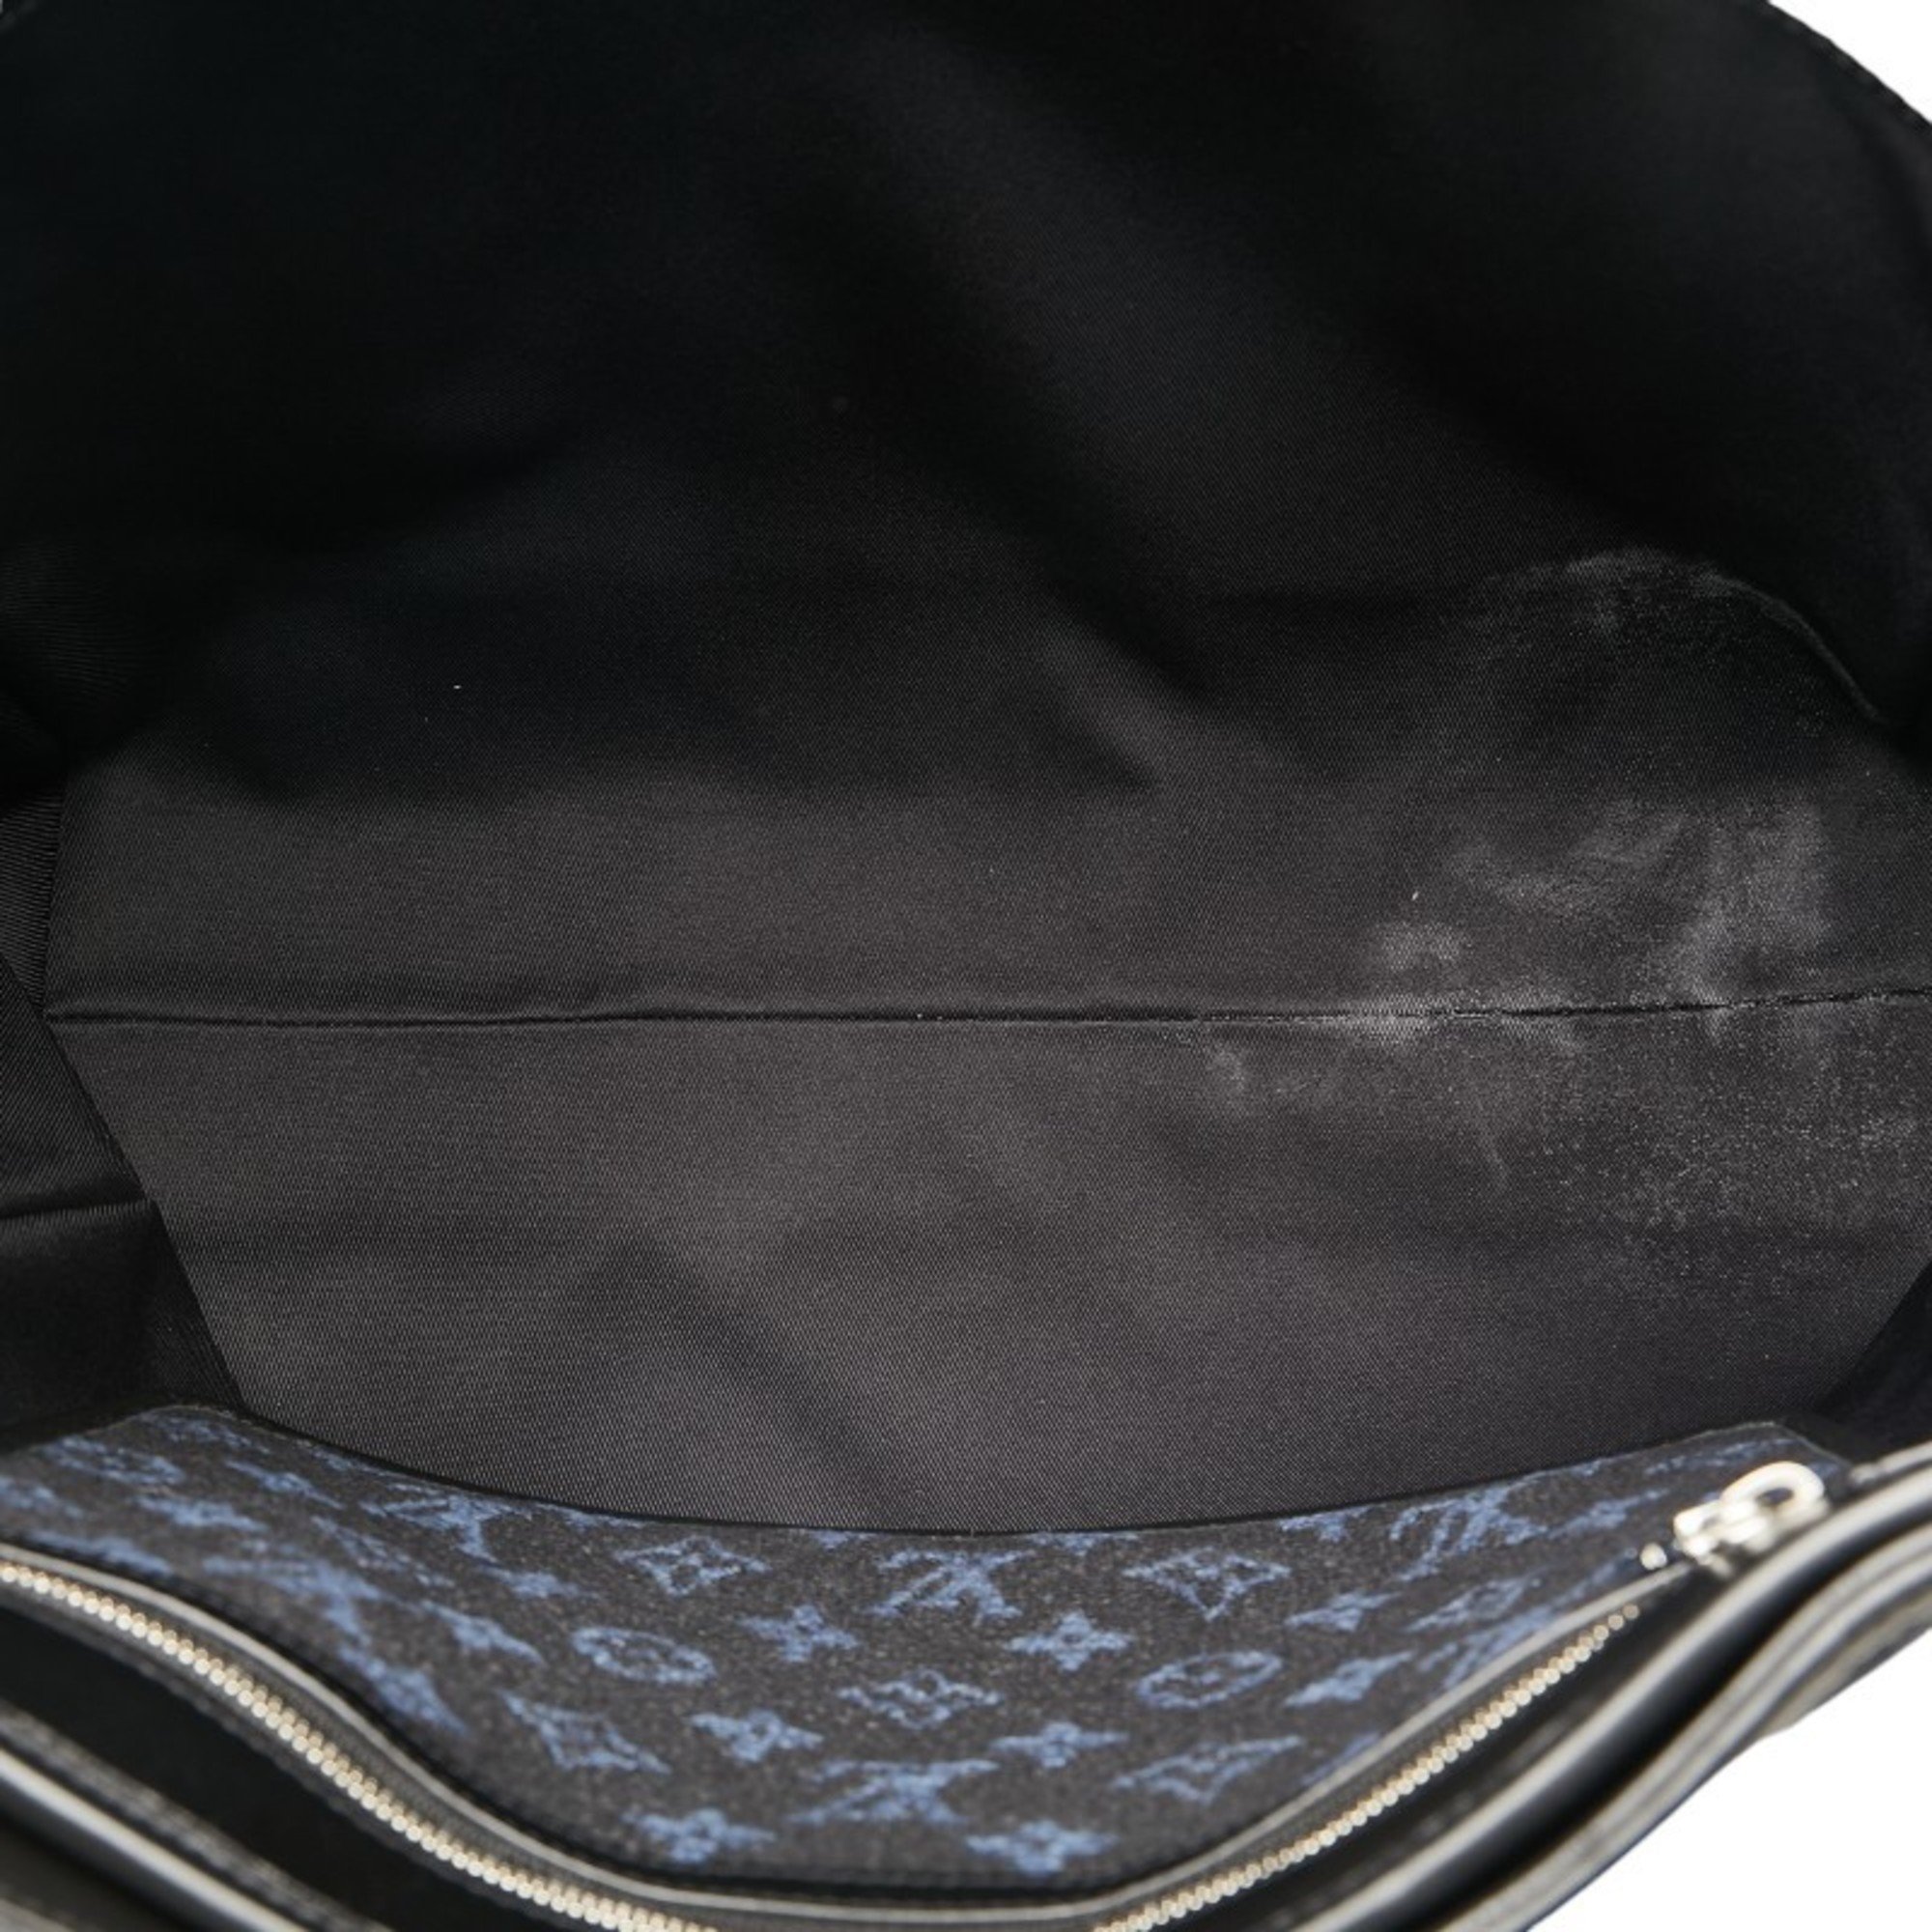 Louis Vuitton Monogram Jacquard Grand Sac Handbag Tote Bag M55203 Blue Black Canvas Leather Women's LOUIS VUITTON